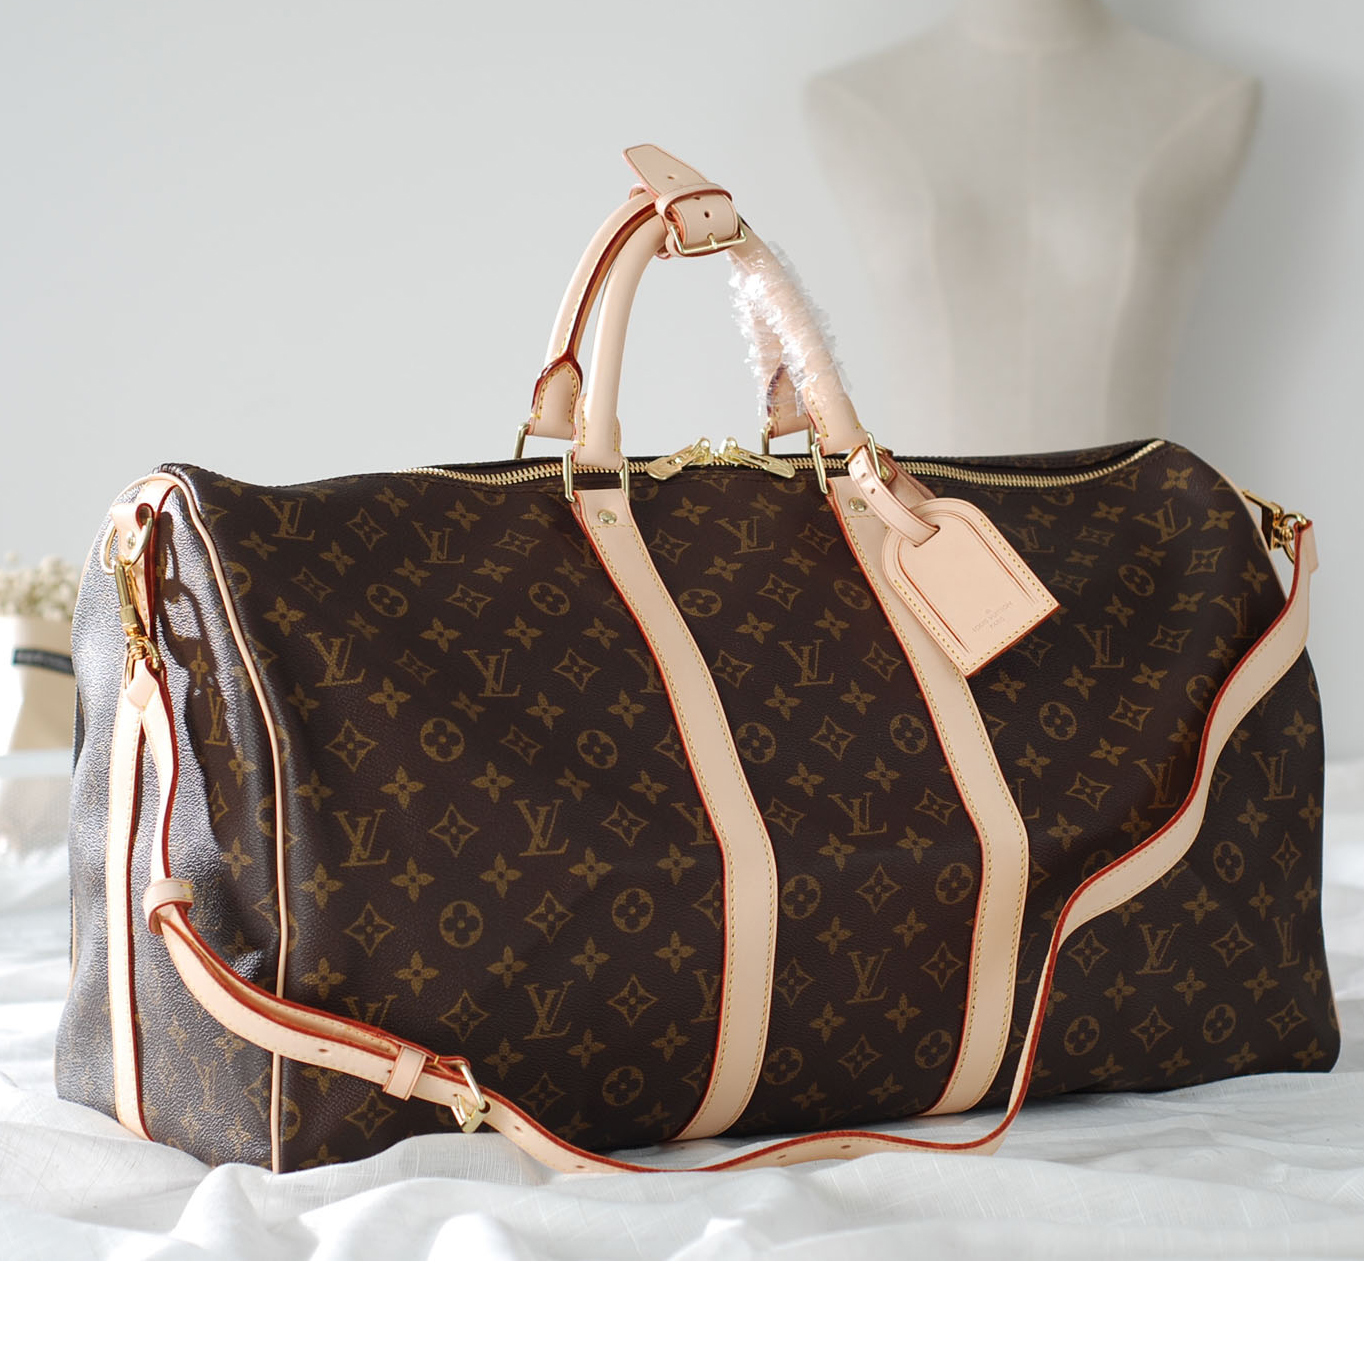 Louis Vuitton Duffle Bag Price Australia